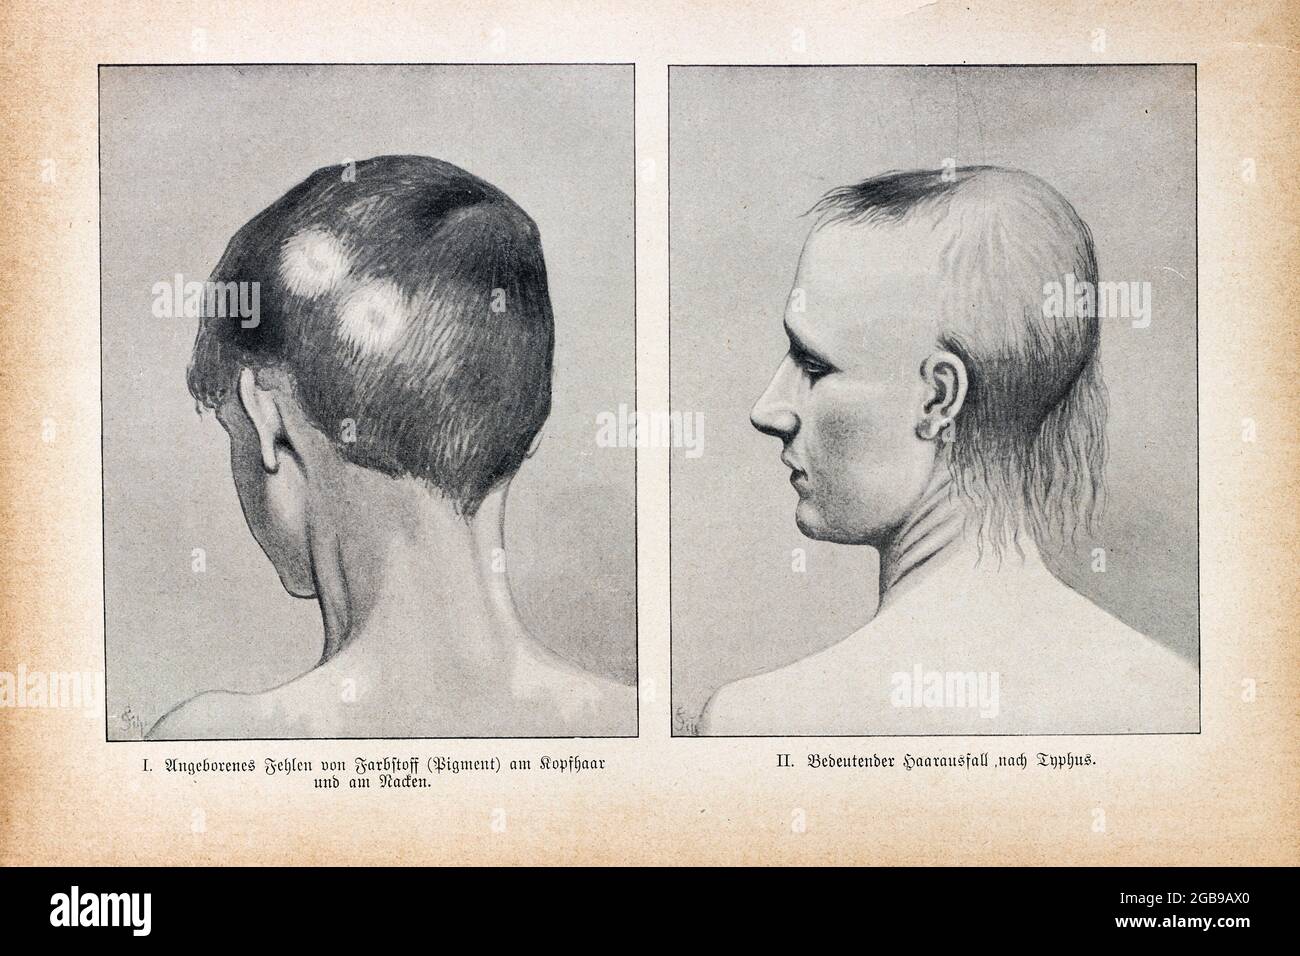 Absence of dye on the hair of the head and significant hair loss after typhoid fever, Der praktische Hausarzt, Ein Weg zur Gesundheit, 1901, Breslau Stock Photo